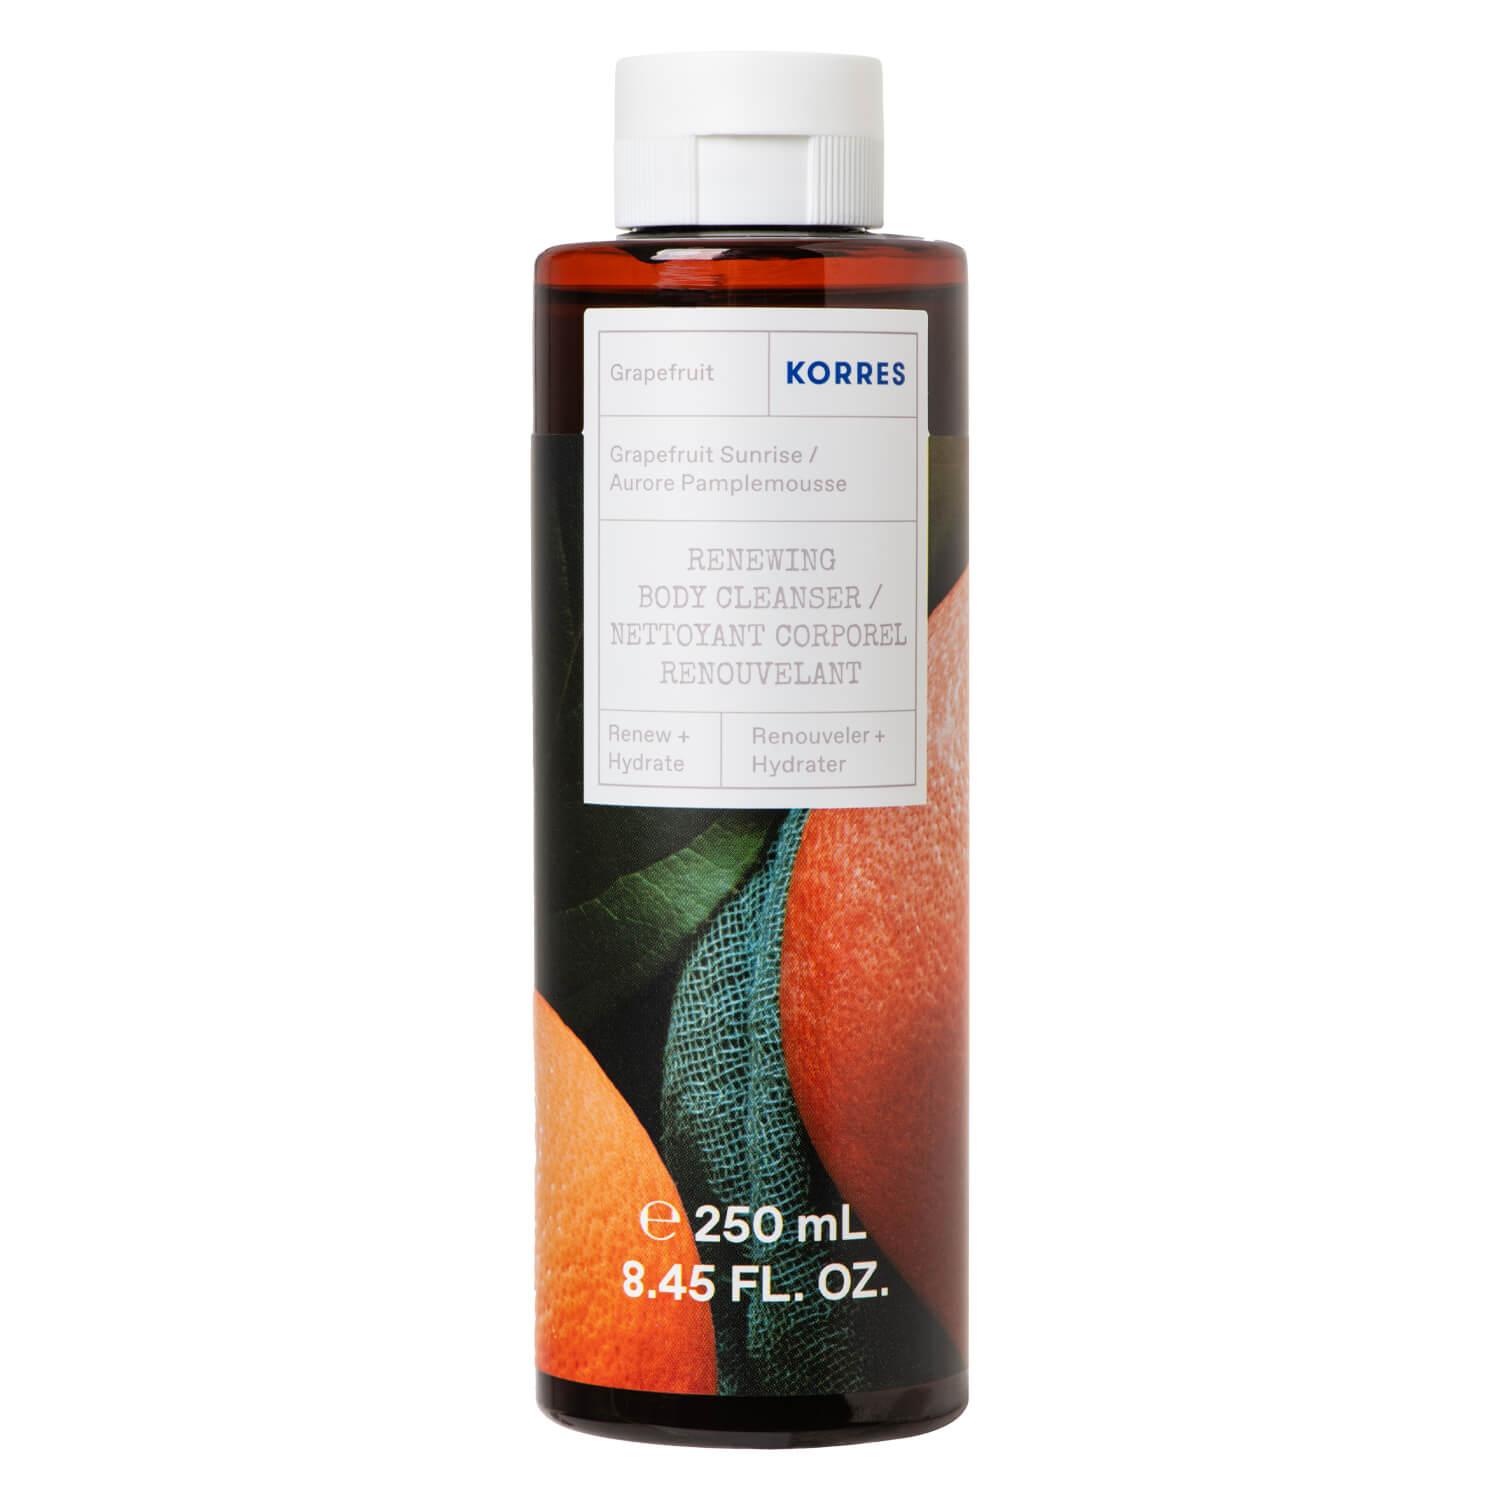 Korres Care - Grapefruit Sunrise Renewing Body Cleanser